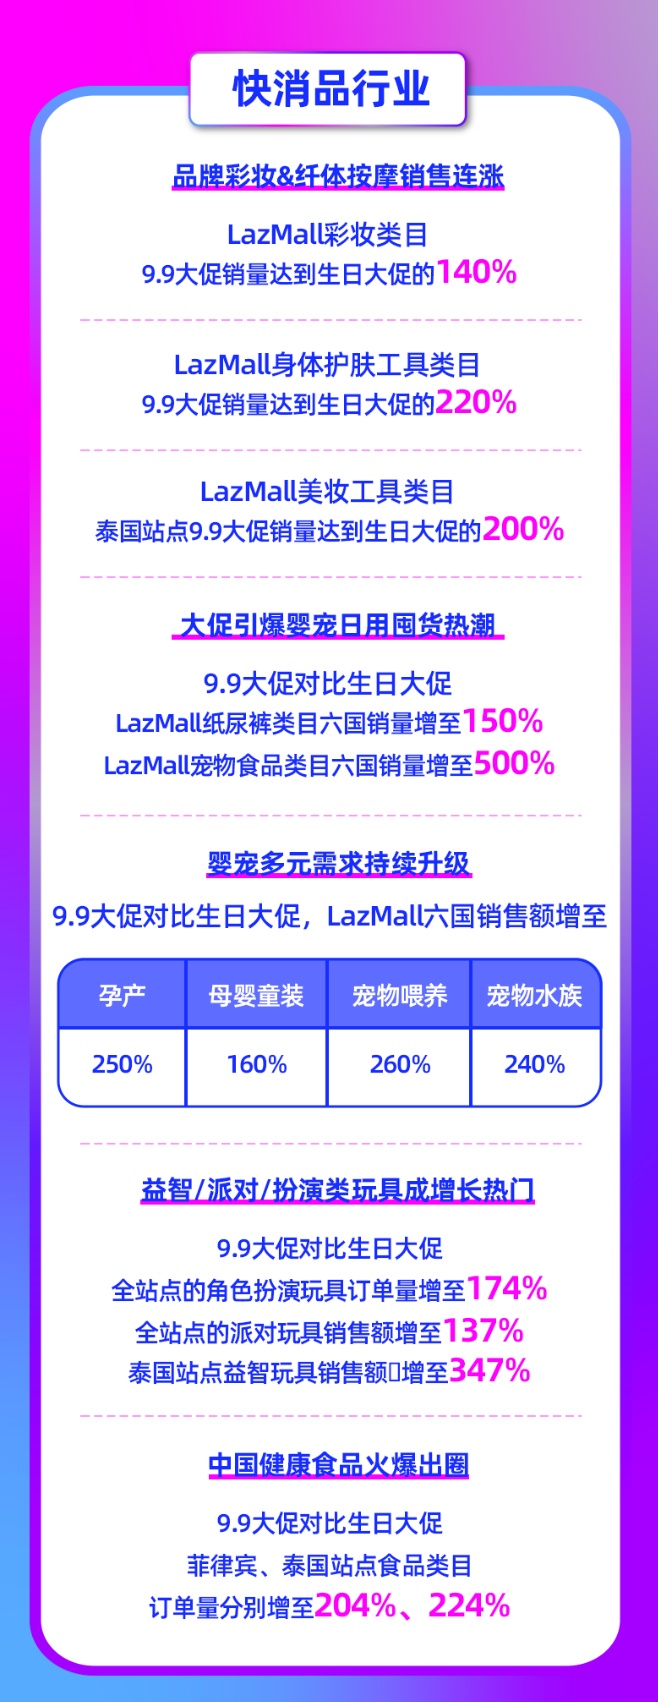 Lazada 9.9大促：新增超50万LazMall店铺会员